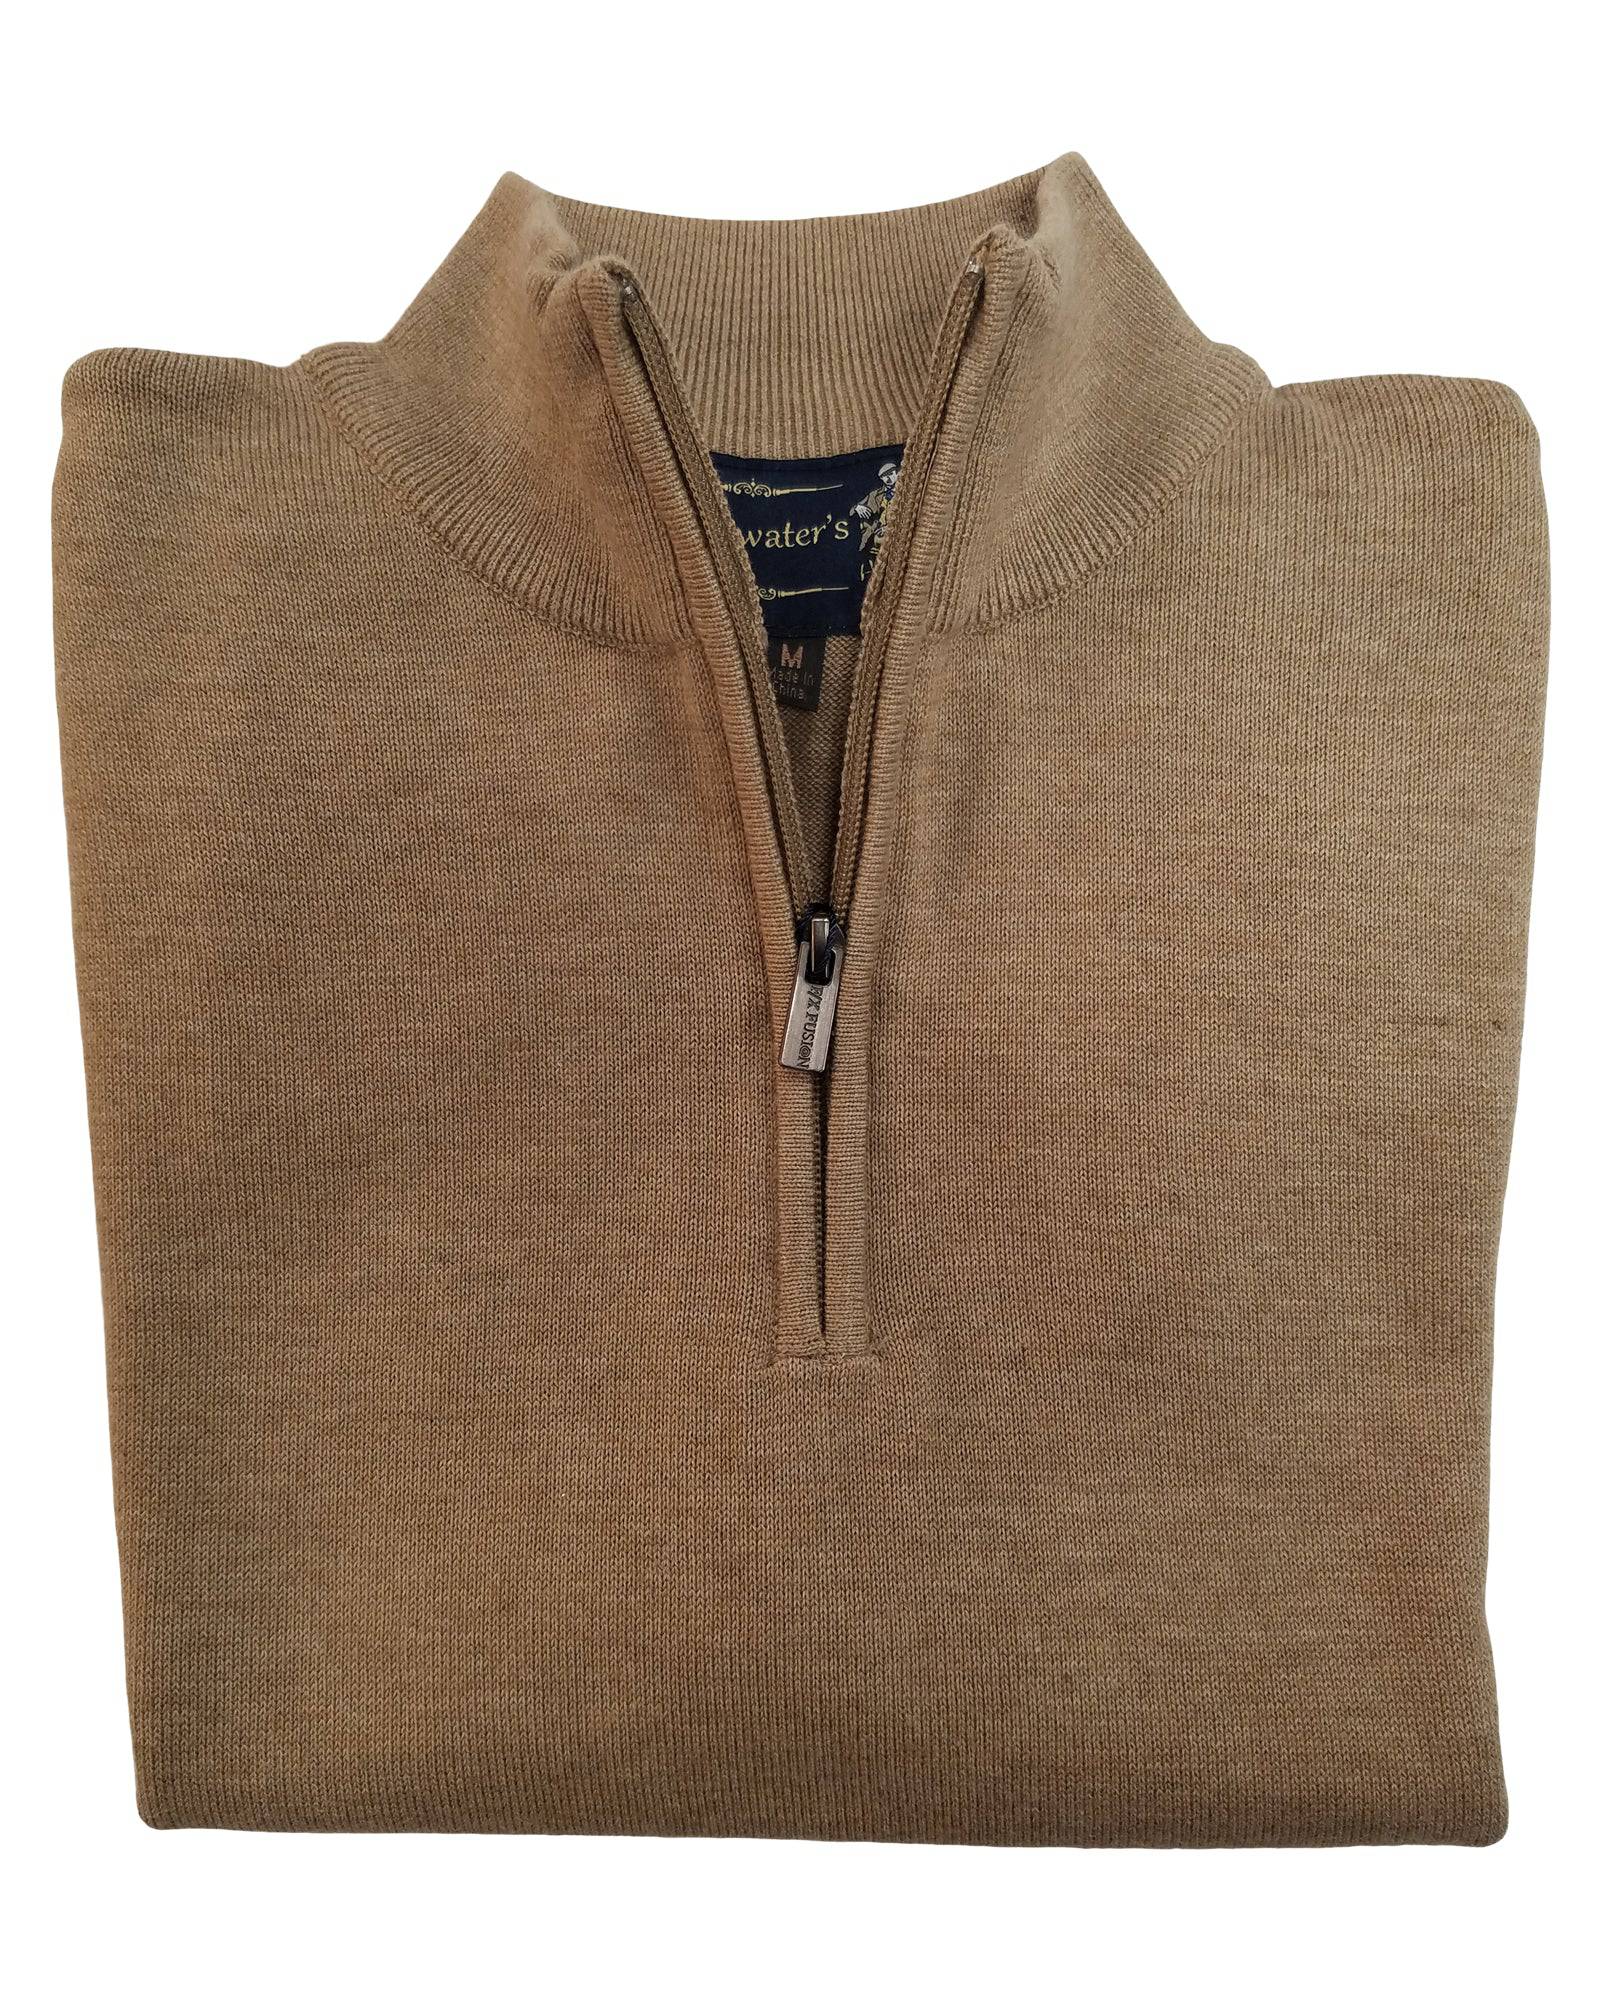 1/4 Zip Mock Sweater Vest in Sand Cotton Blend - Rainwater's Men's Clothing and Tuxedo Rental